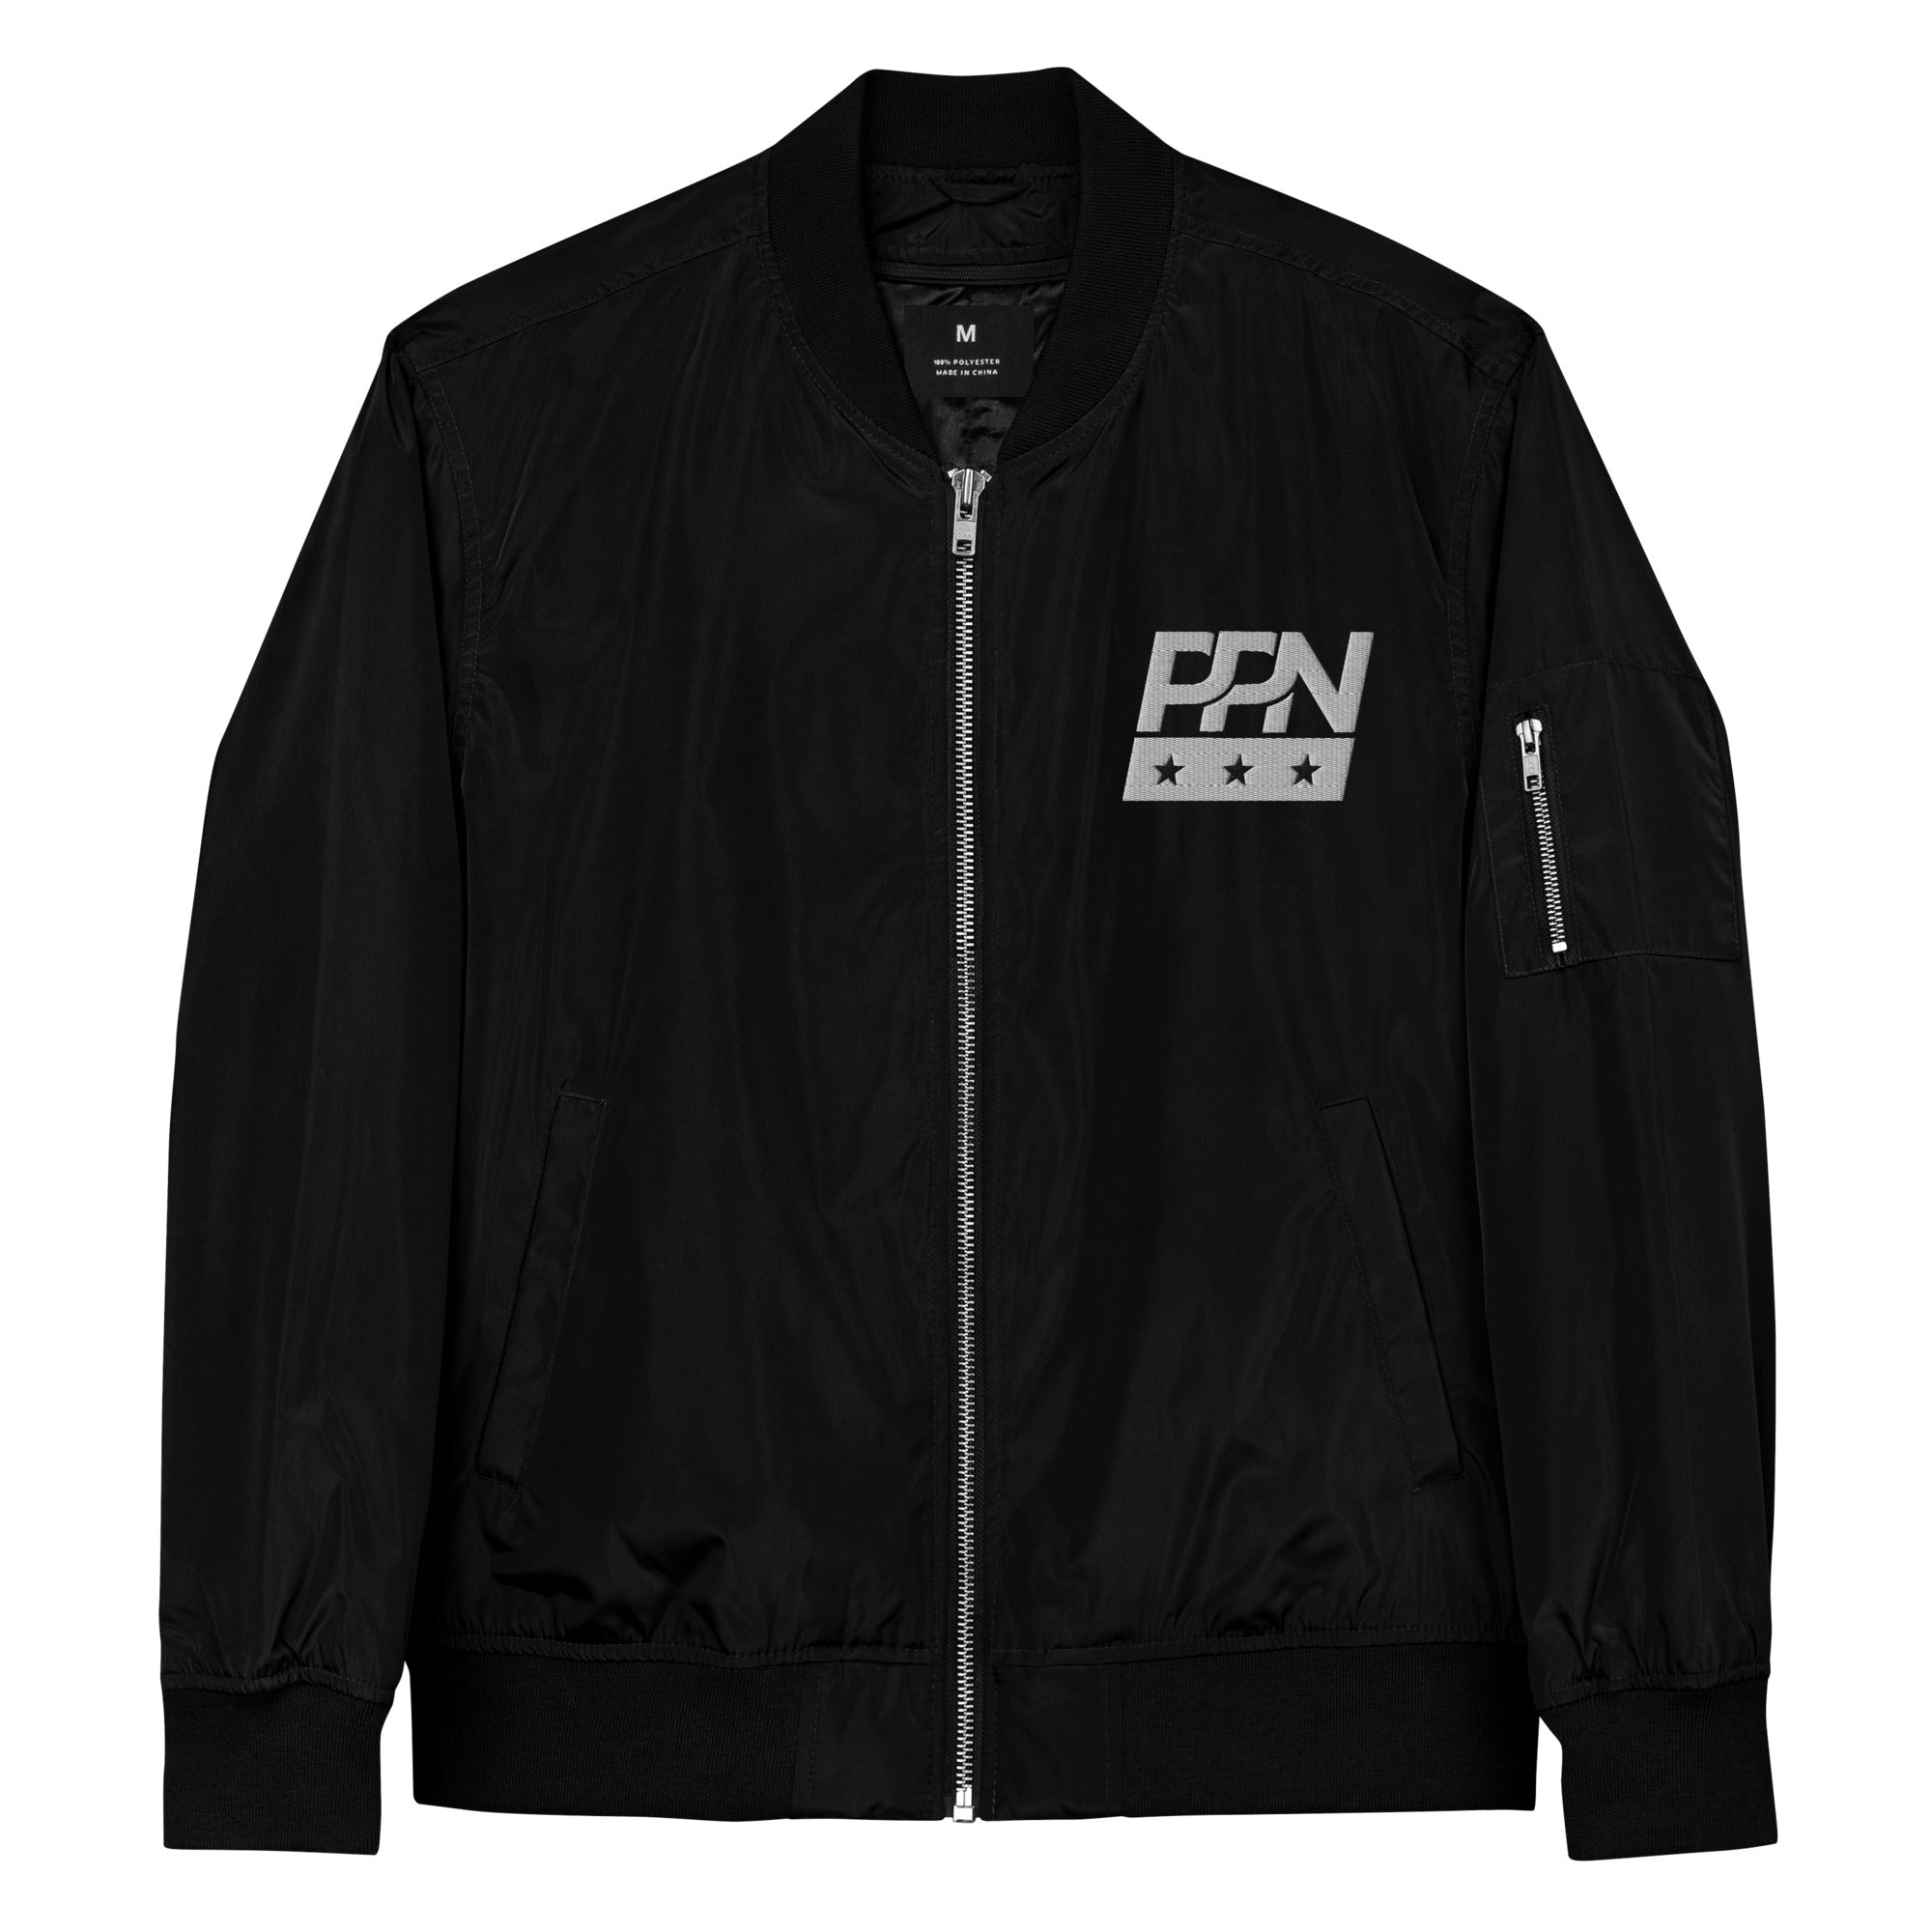 PPN Premium recycled bomber jacket